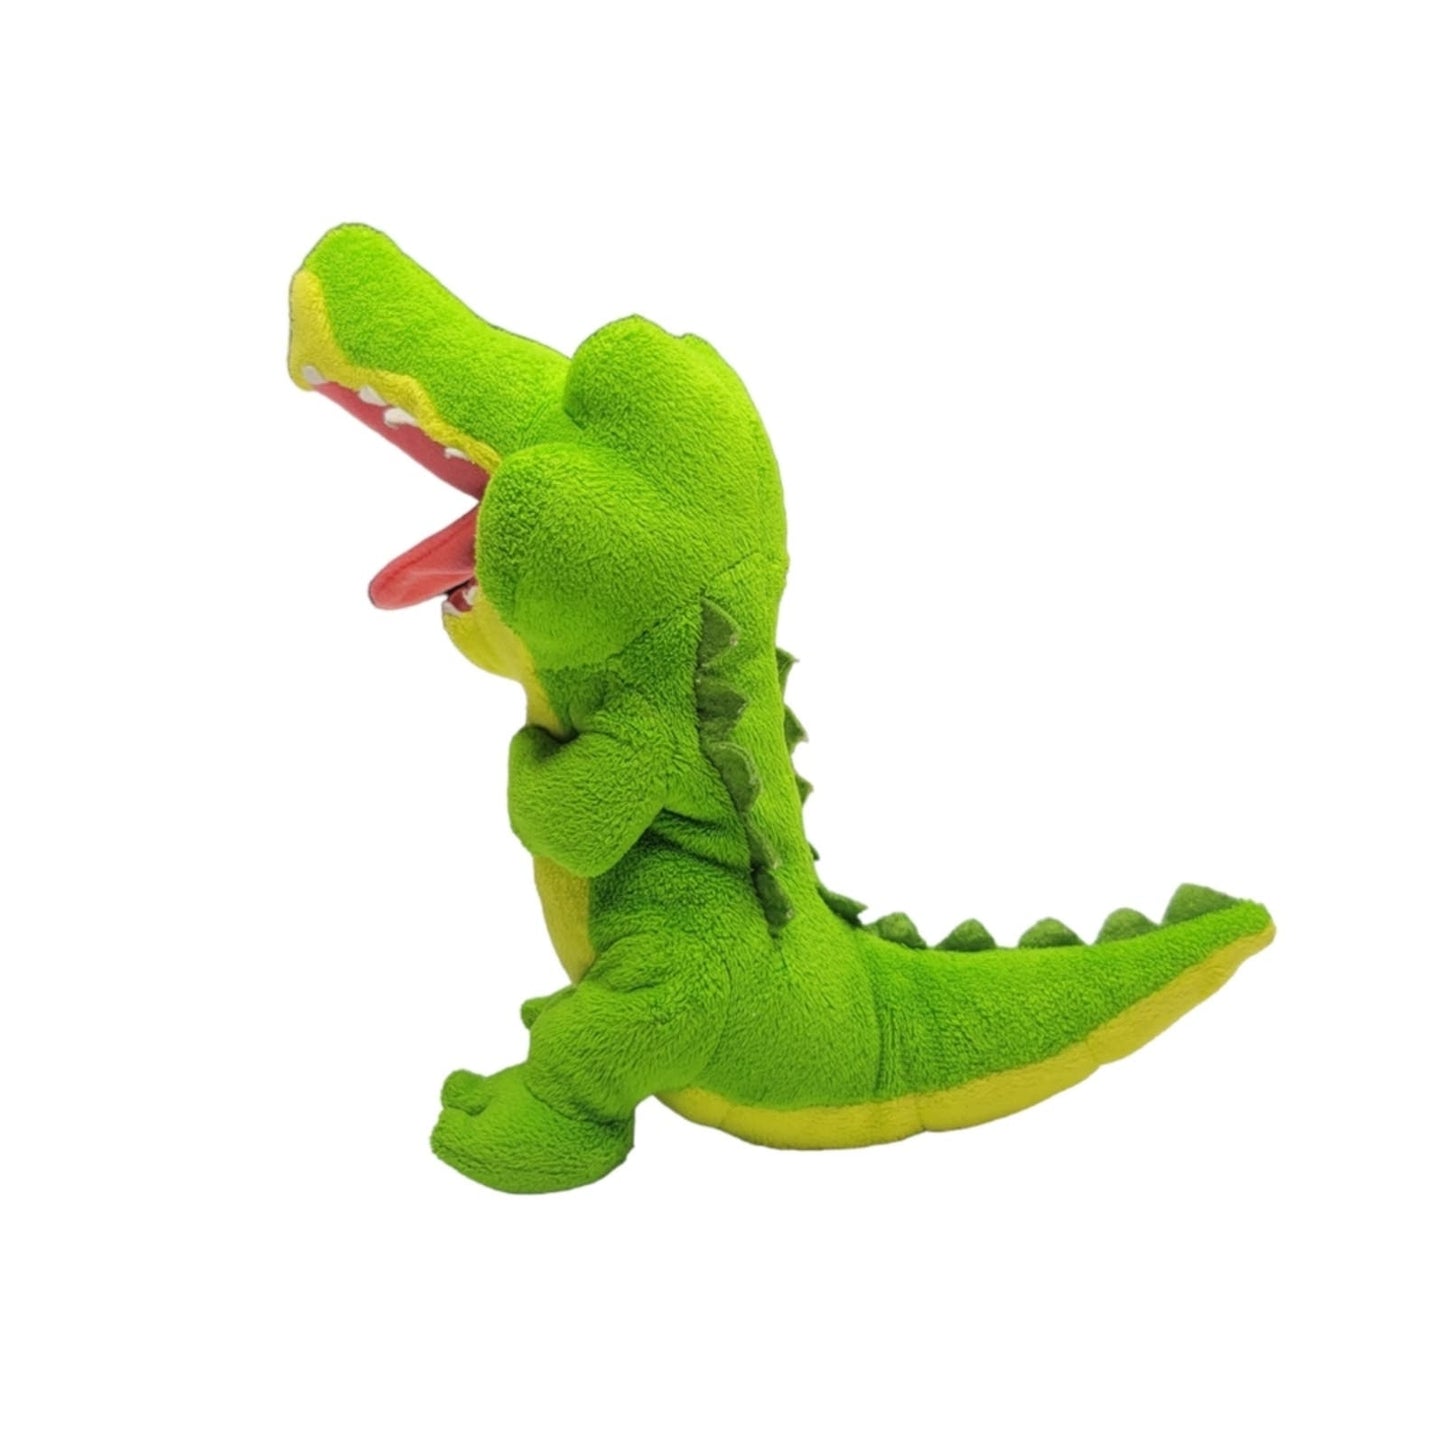 Disney Jr. Jake Neverland Pirates Plush Tic Toc Crocodile 9” Peter Pan Stuffed